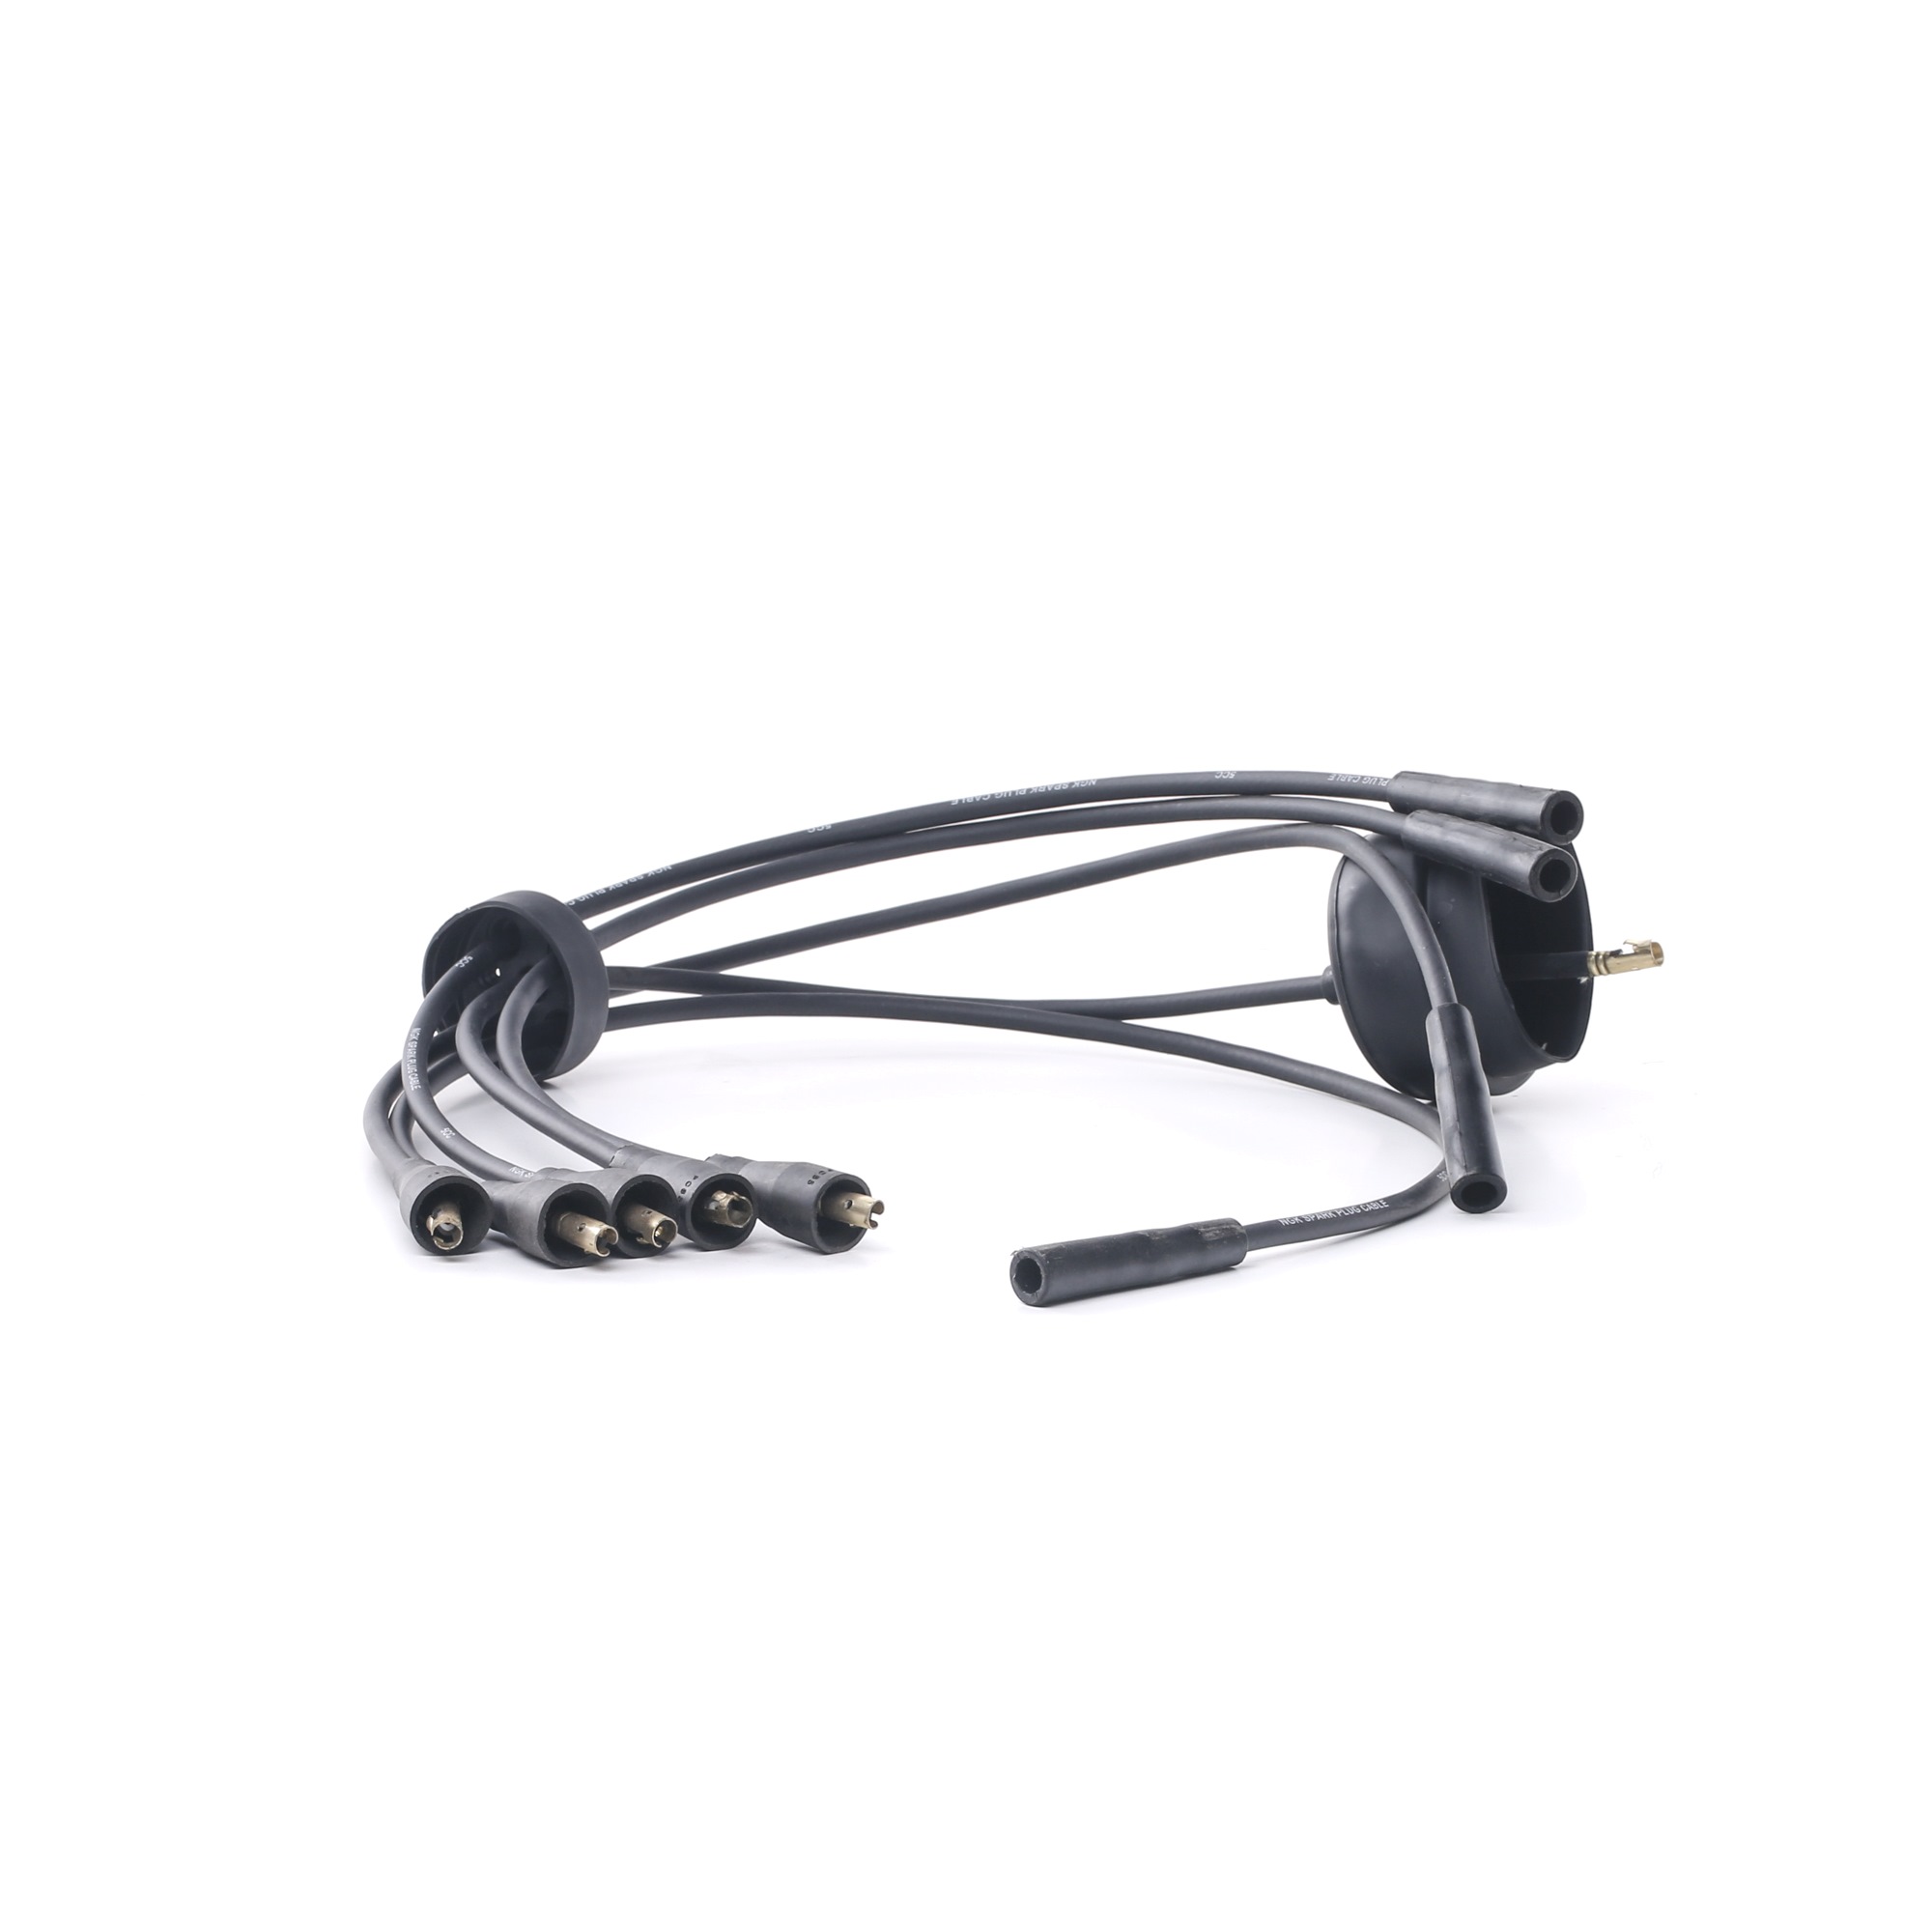 Alfa Romeo 147 Ignition Cable Kit NGK 0530 cheap